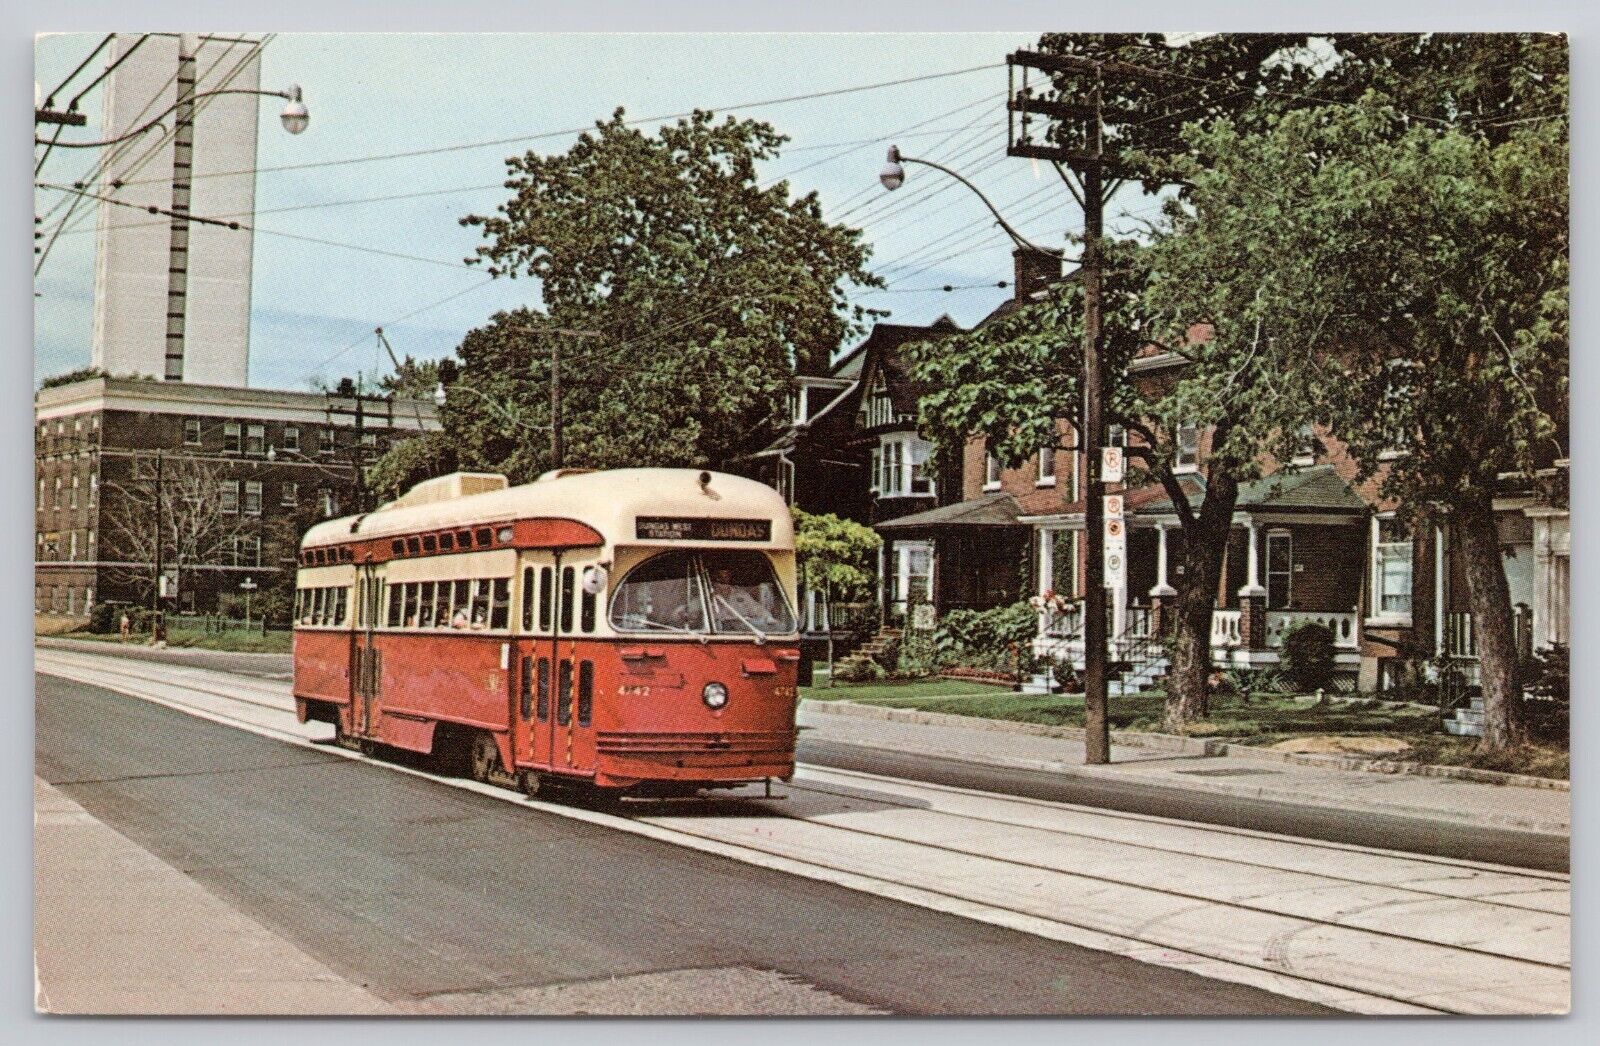 Toronto Ontario Canada, Transit Commission A-13 Class PCC Car, Vintage Postcard